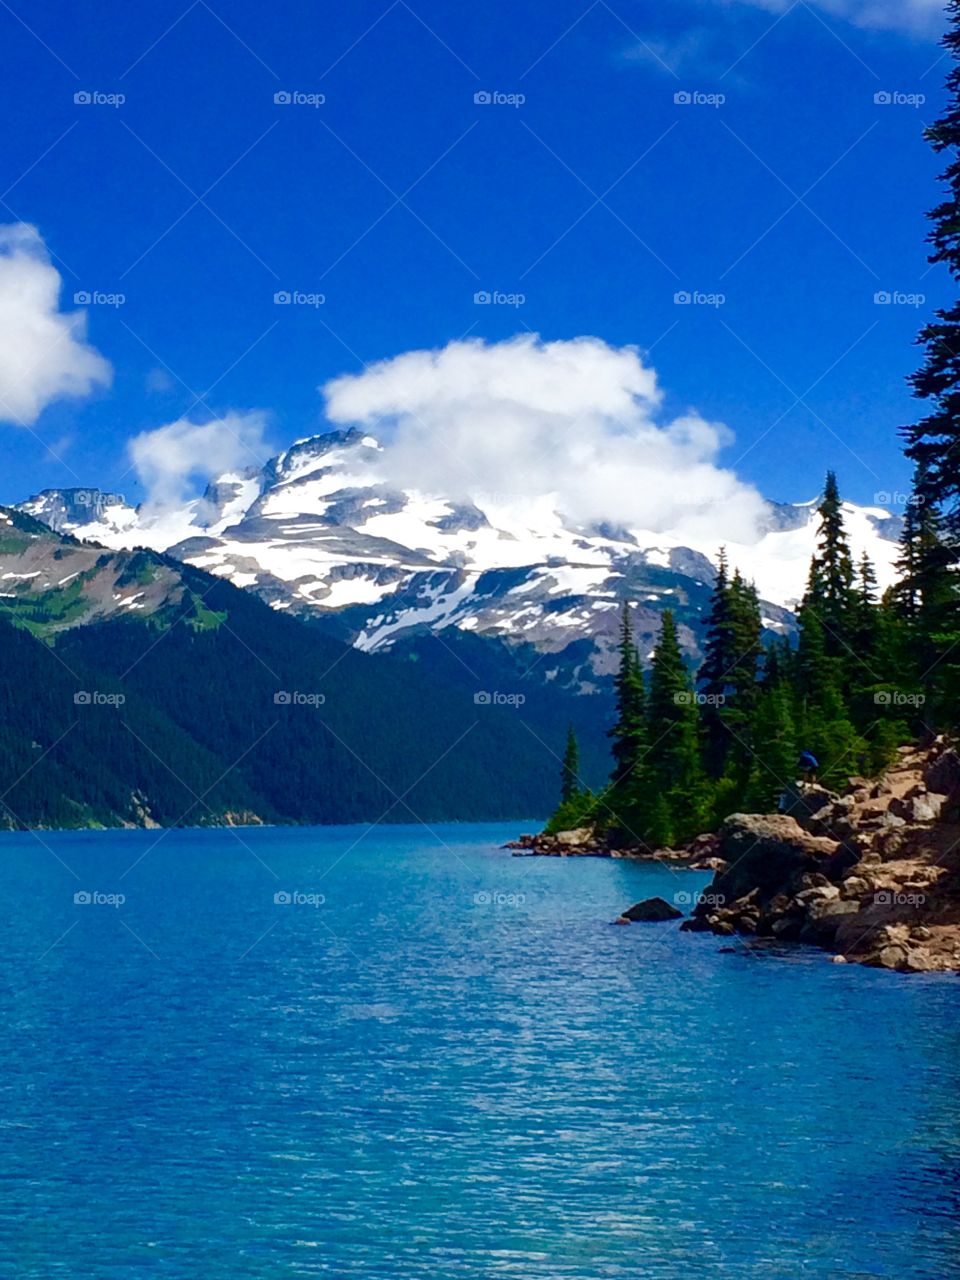 Alpine Glacial Lake